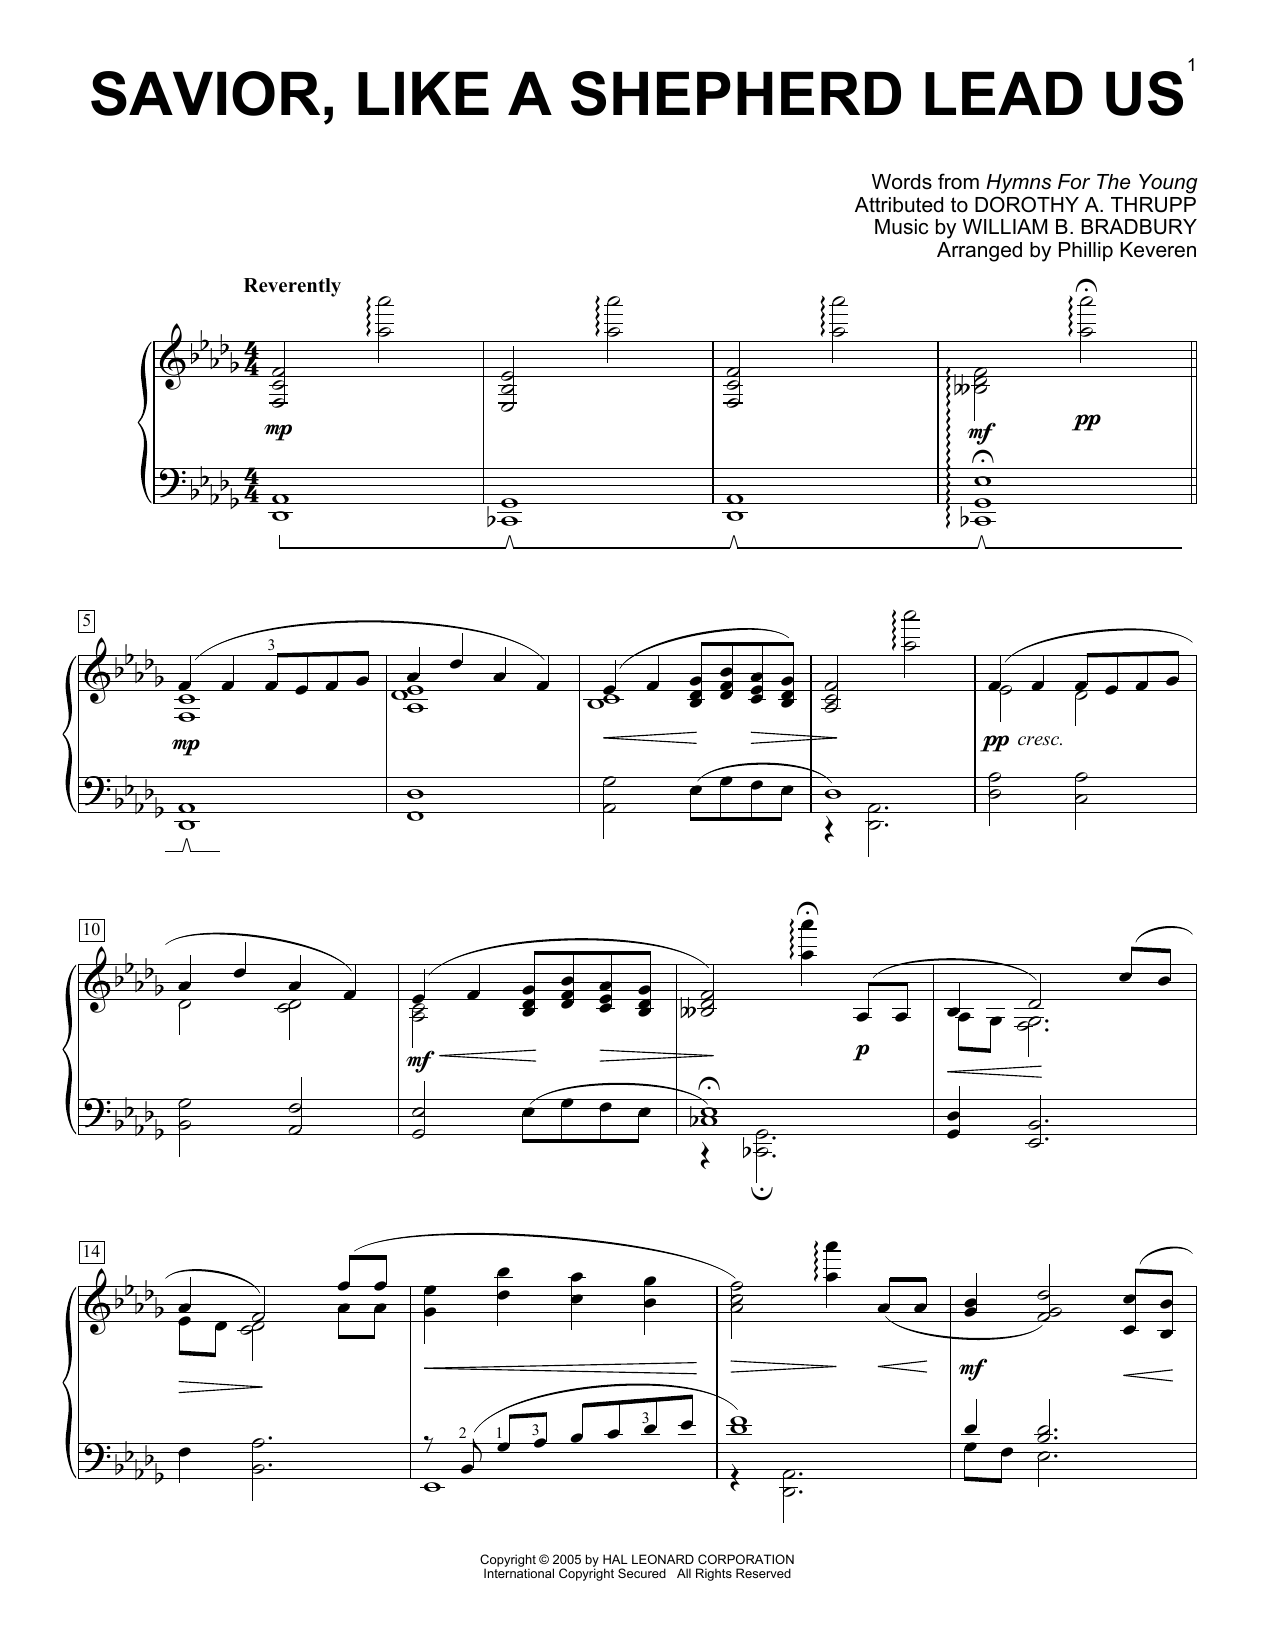 William B. Bradbury Savior, Like A Shepherd Lead Us [Jazz version] (arr. Phillip Keveren) Sheet Music Notes & Chords for Piano Solo - Download or Print PDF